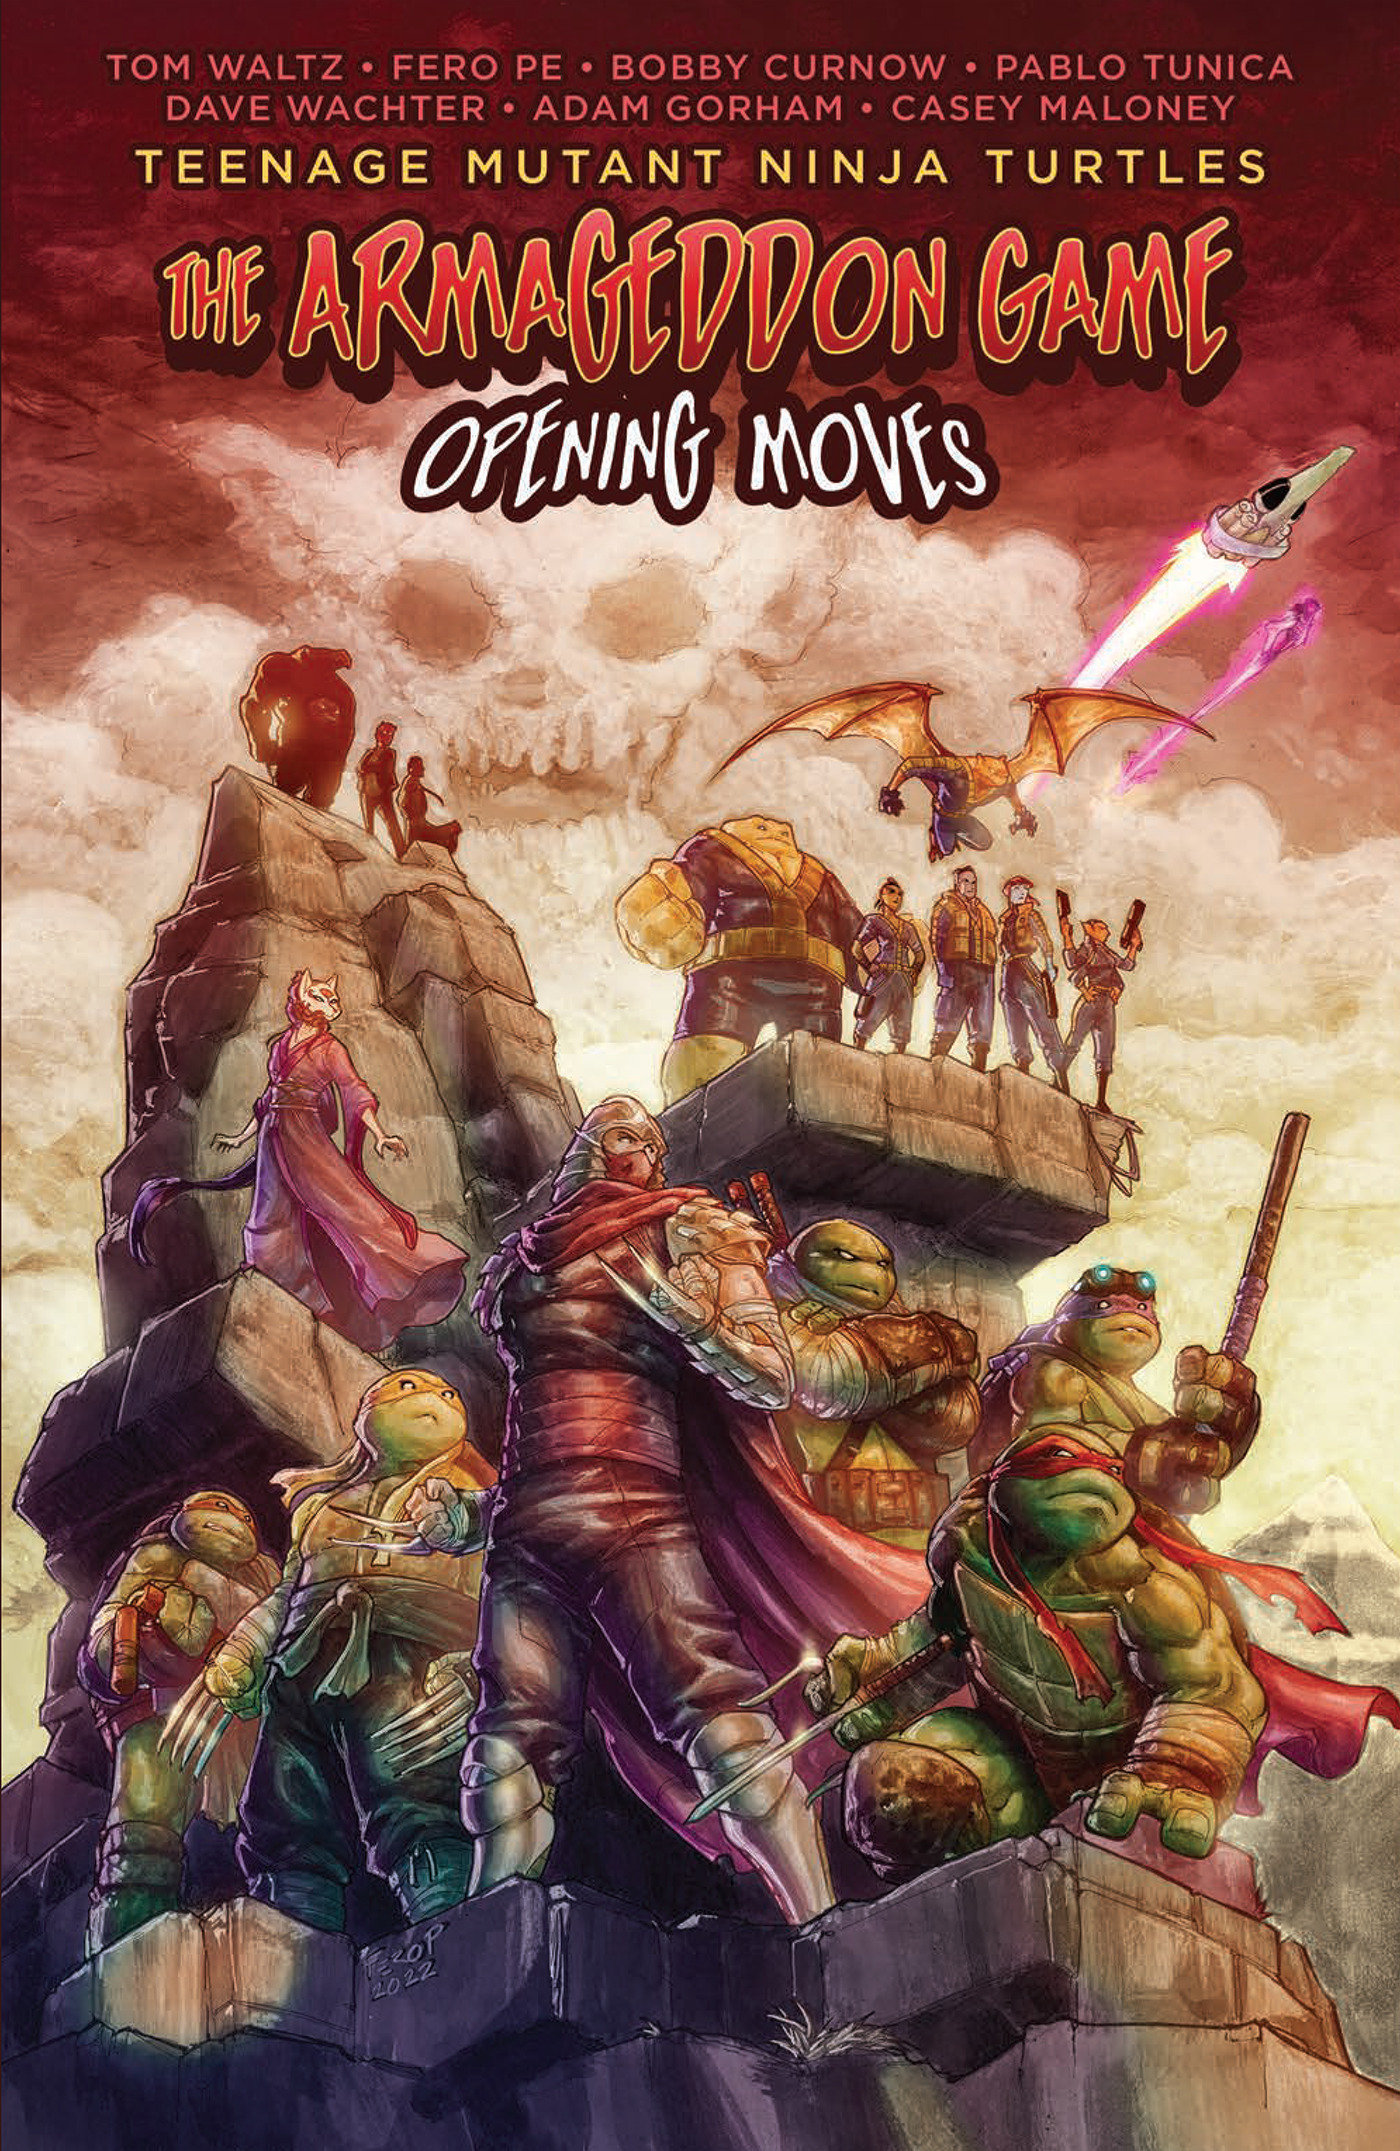 Teenage Mutant Ninja Turtles The Armageddon Game Opening Moves Graphic Novel